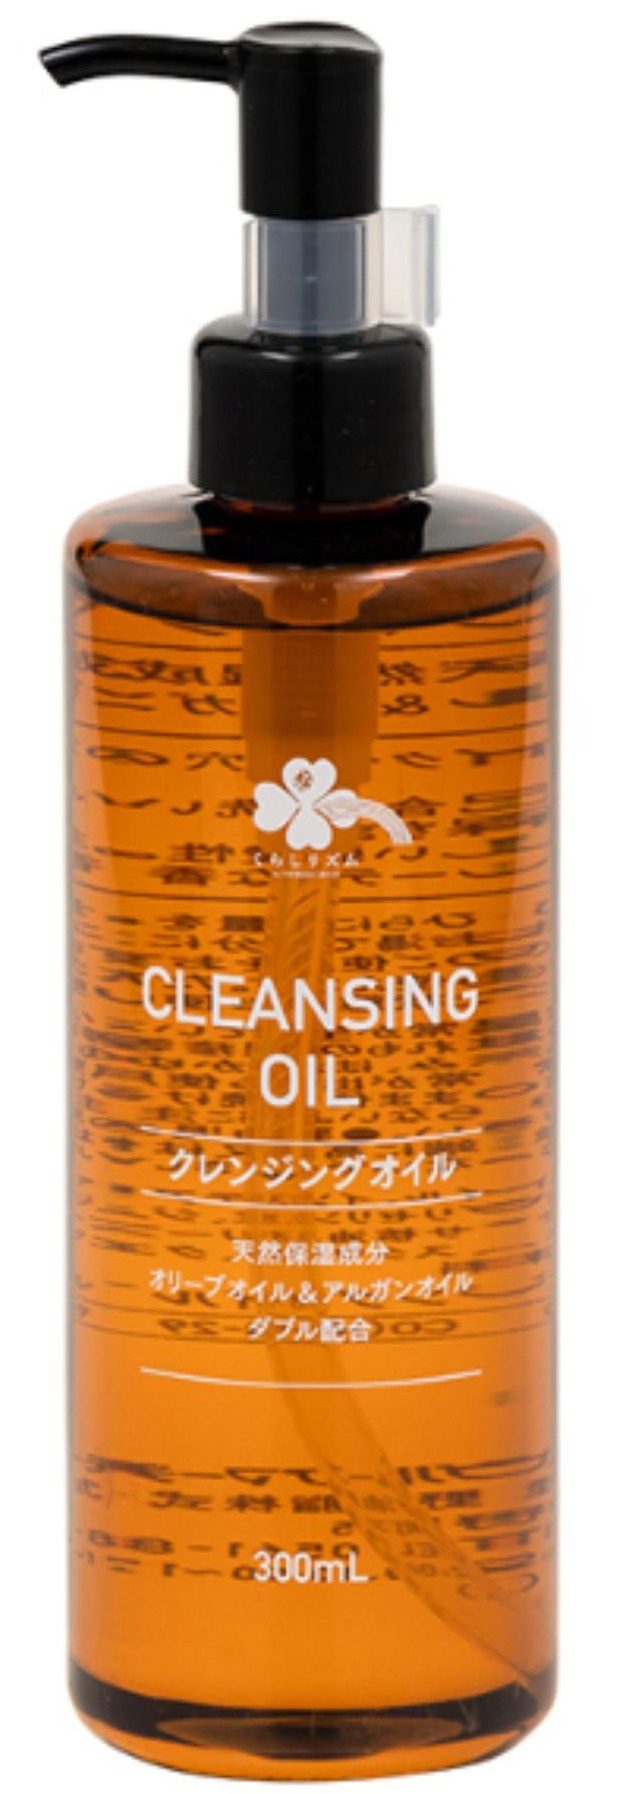 Kurashirizumu Cleansing Oil